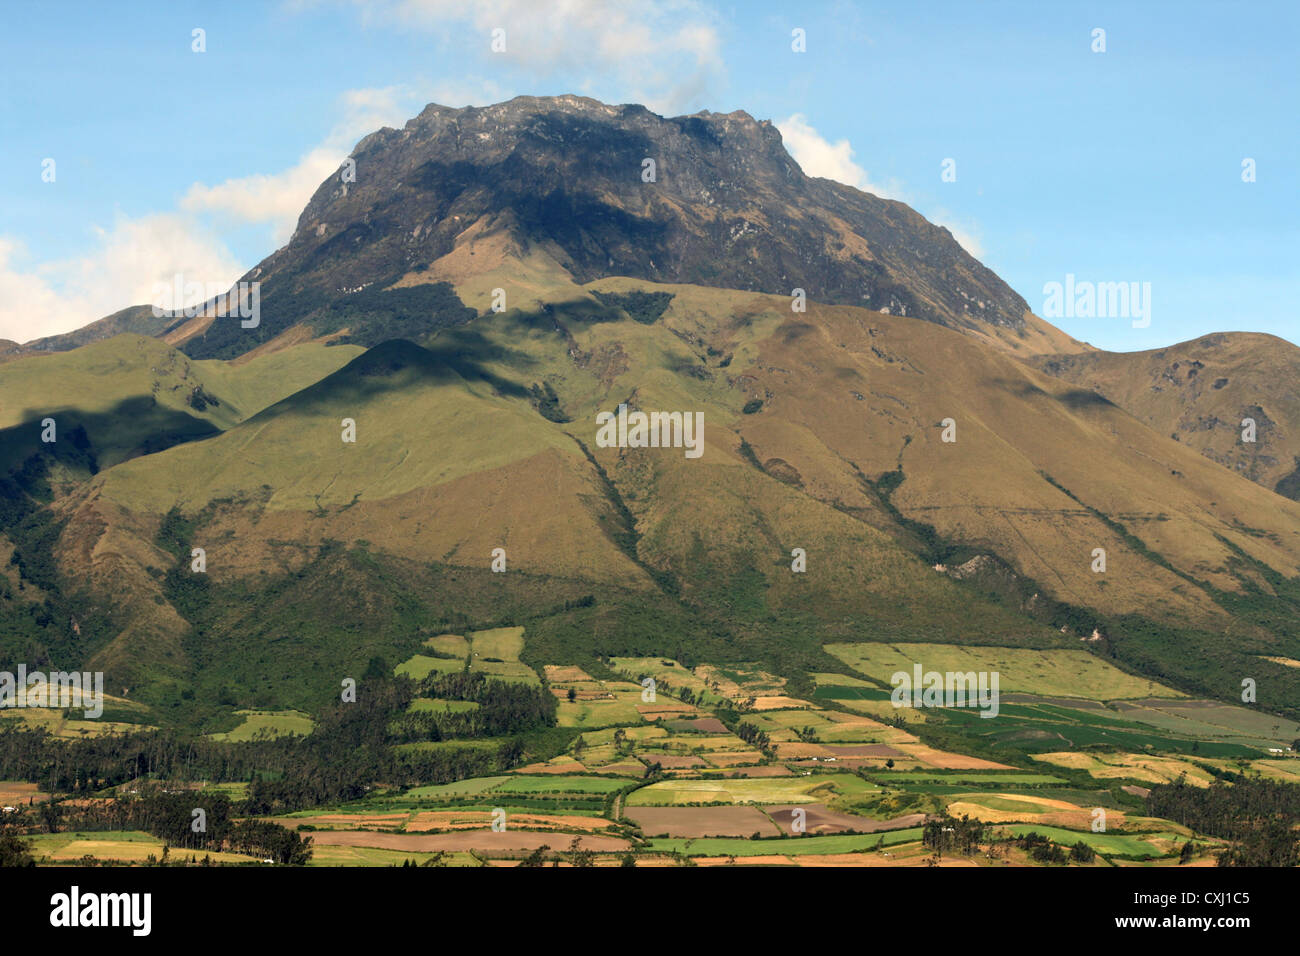 The dormant volcano, Mount Imbabura, with fields climbing its flanks near Cotacachi, Ecuador Stock Photo